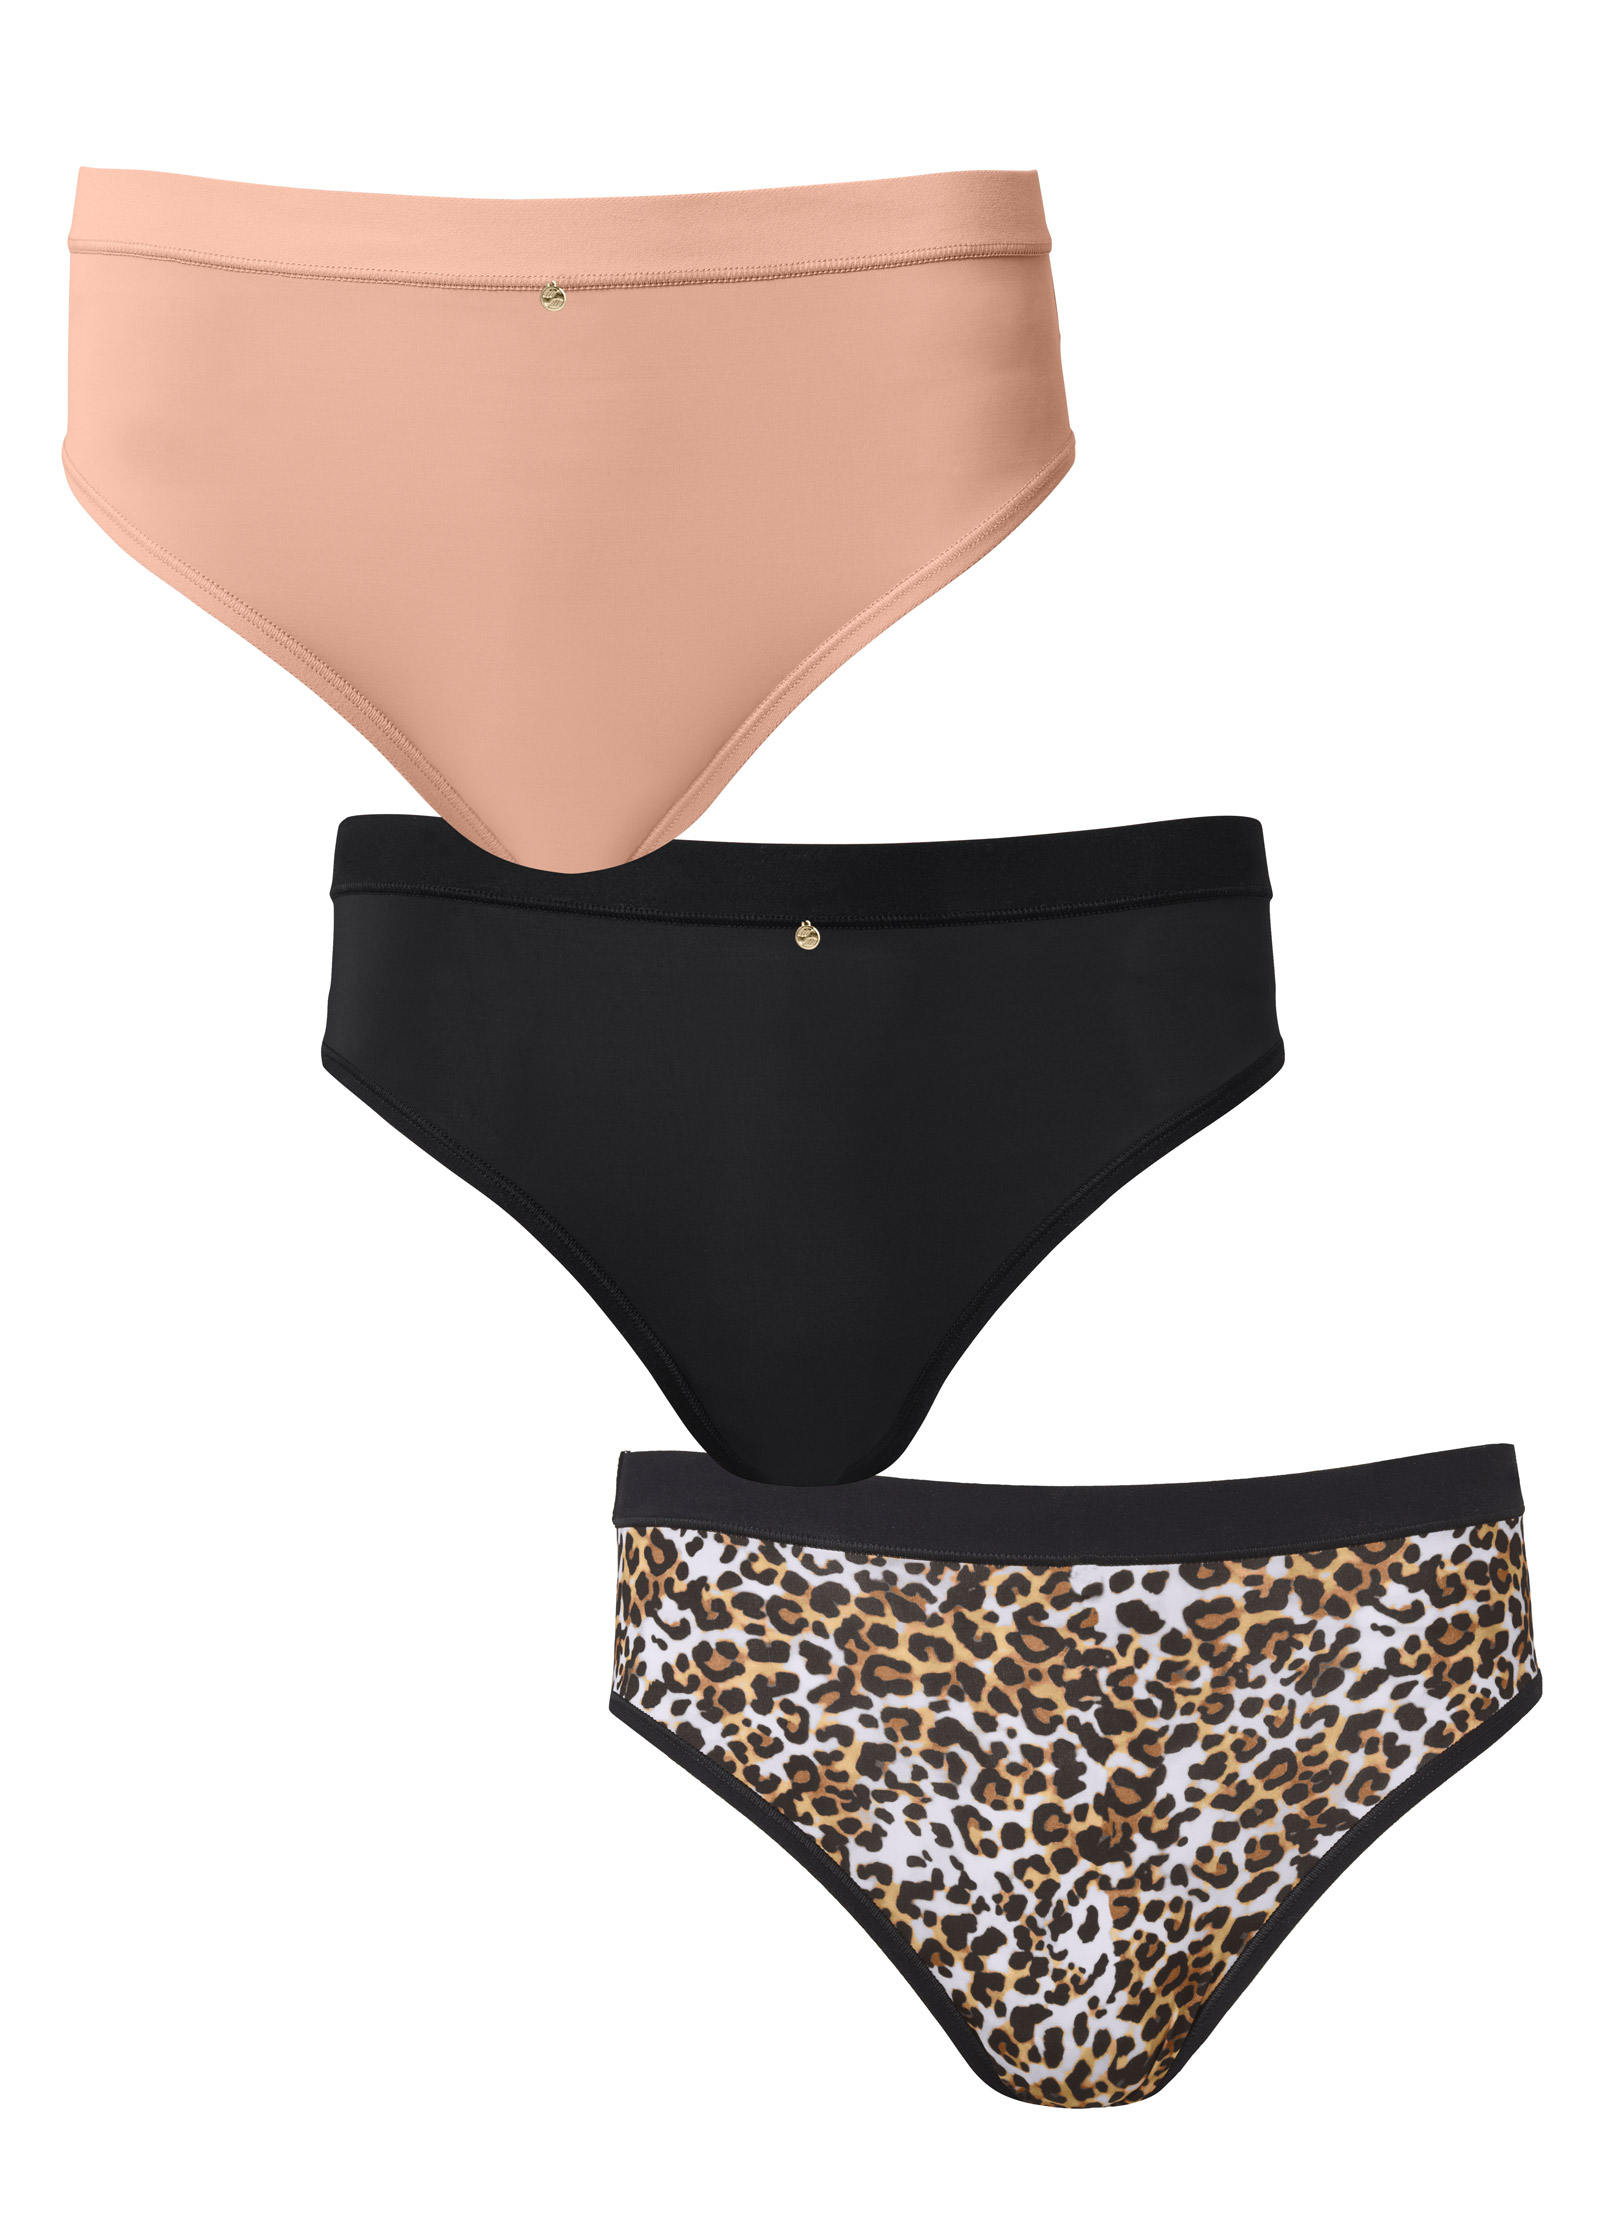 lingerie Underwear  US Sizes M-XL High Waist Strappy Floral Black Lace Panty 